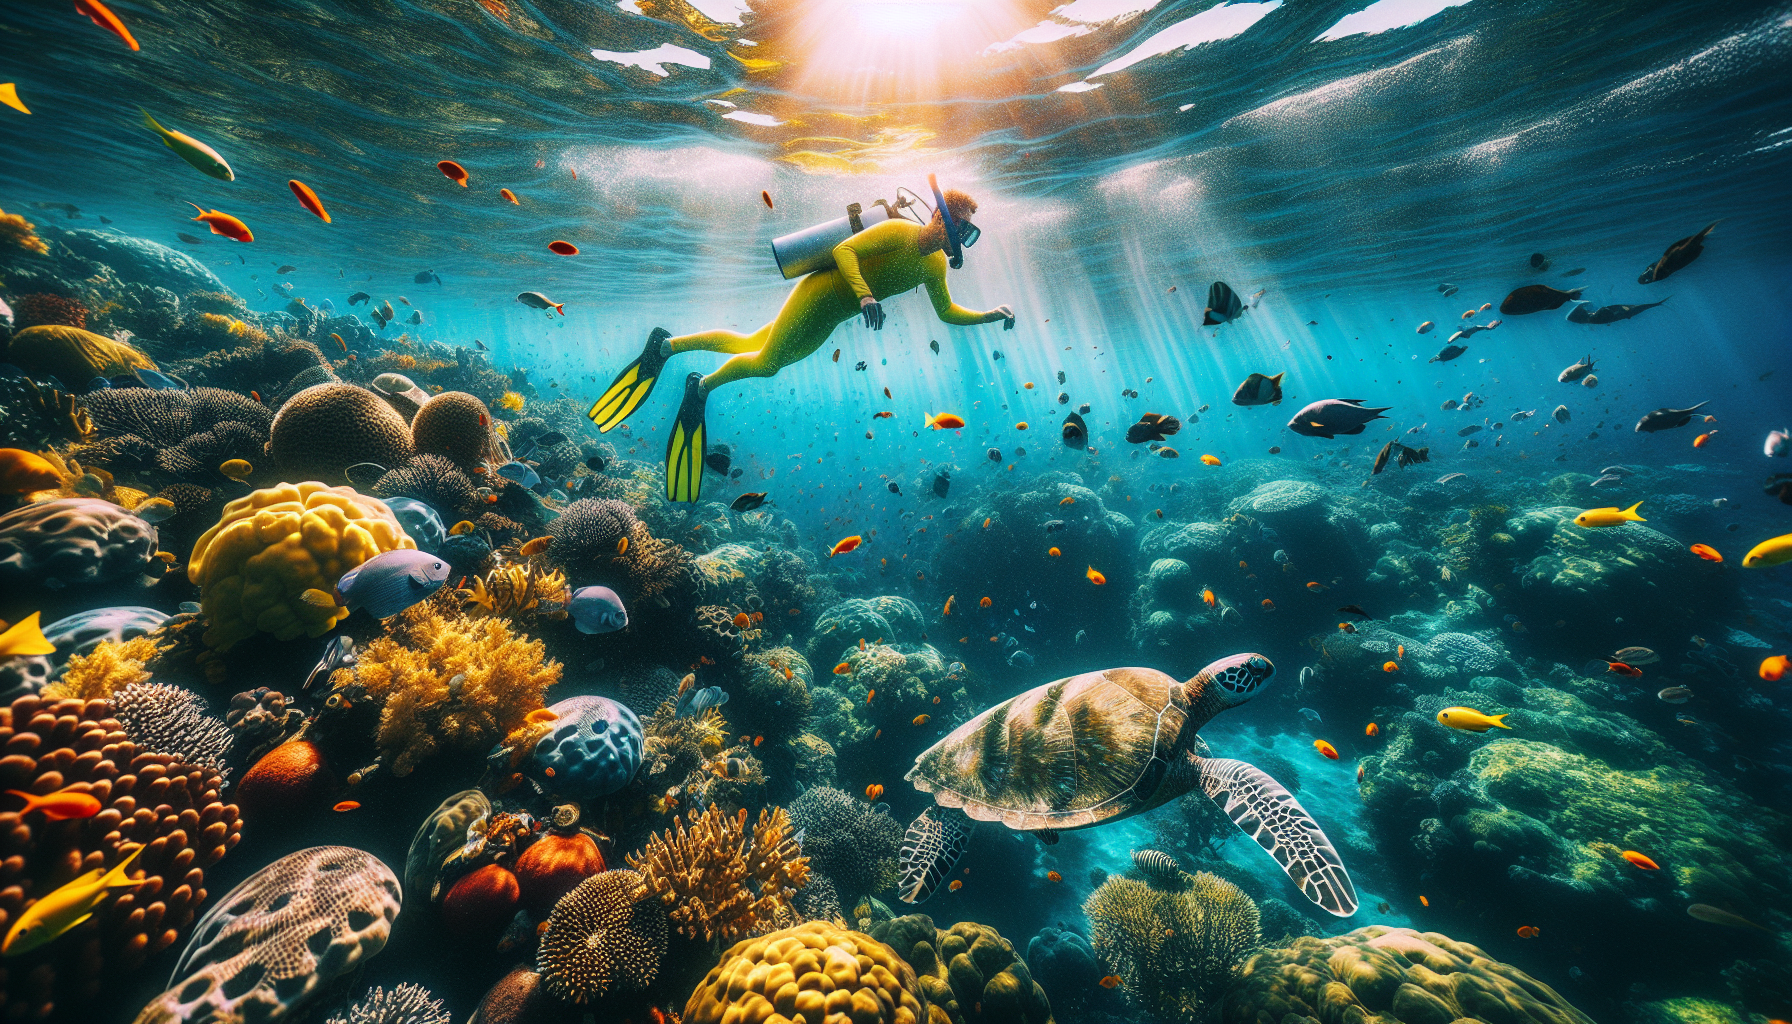 Snorkeling among vibrant marine life at Catalina Island, Costa Rica